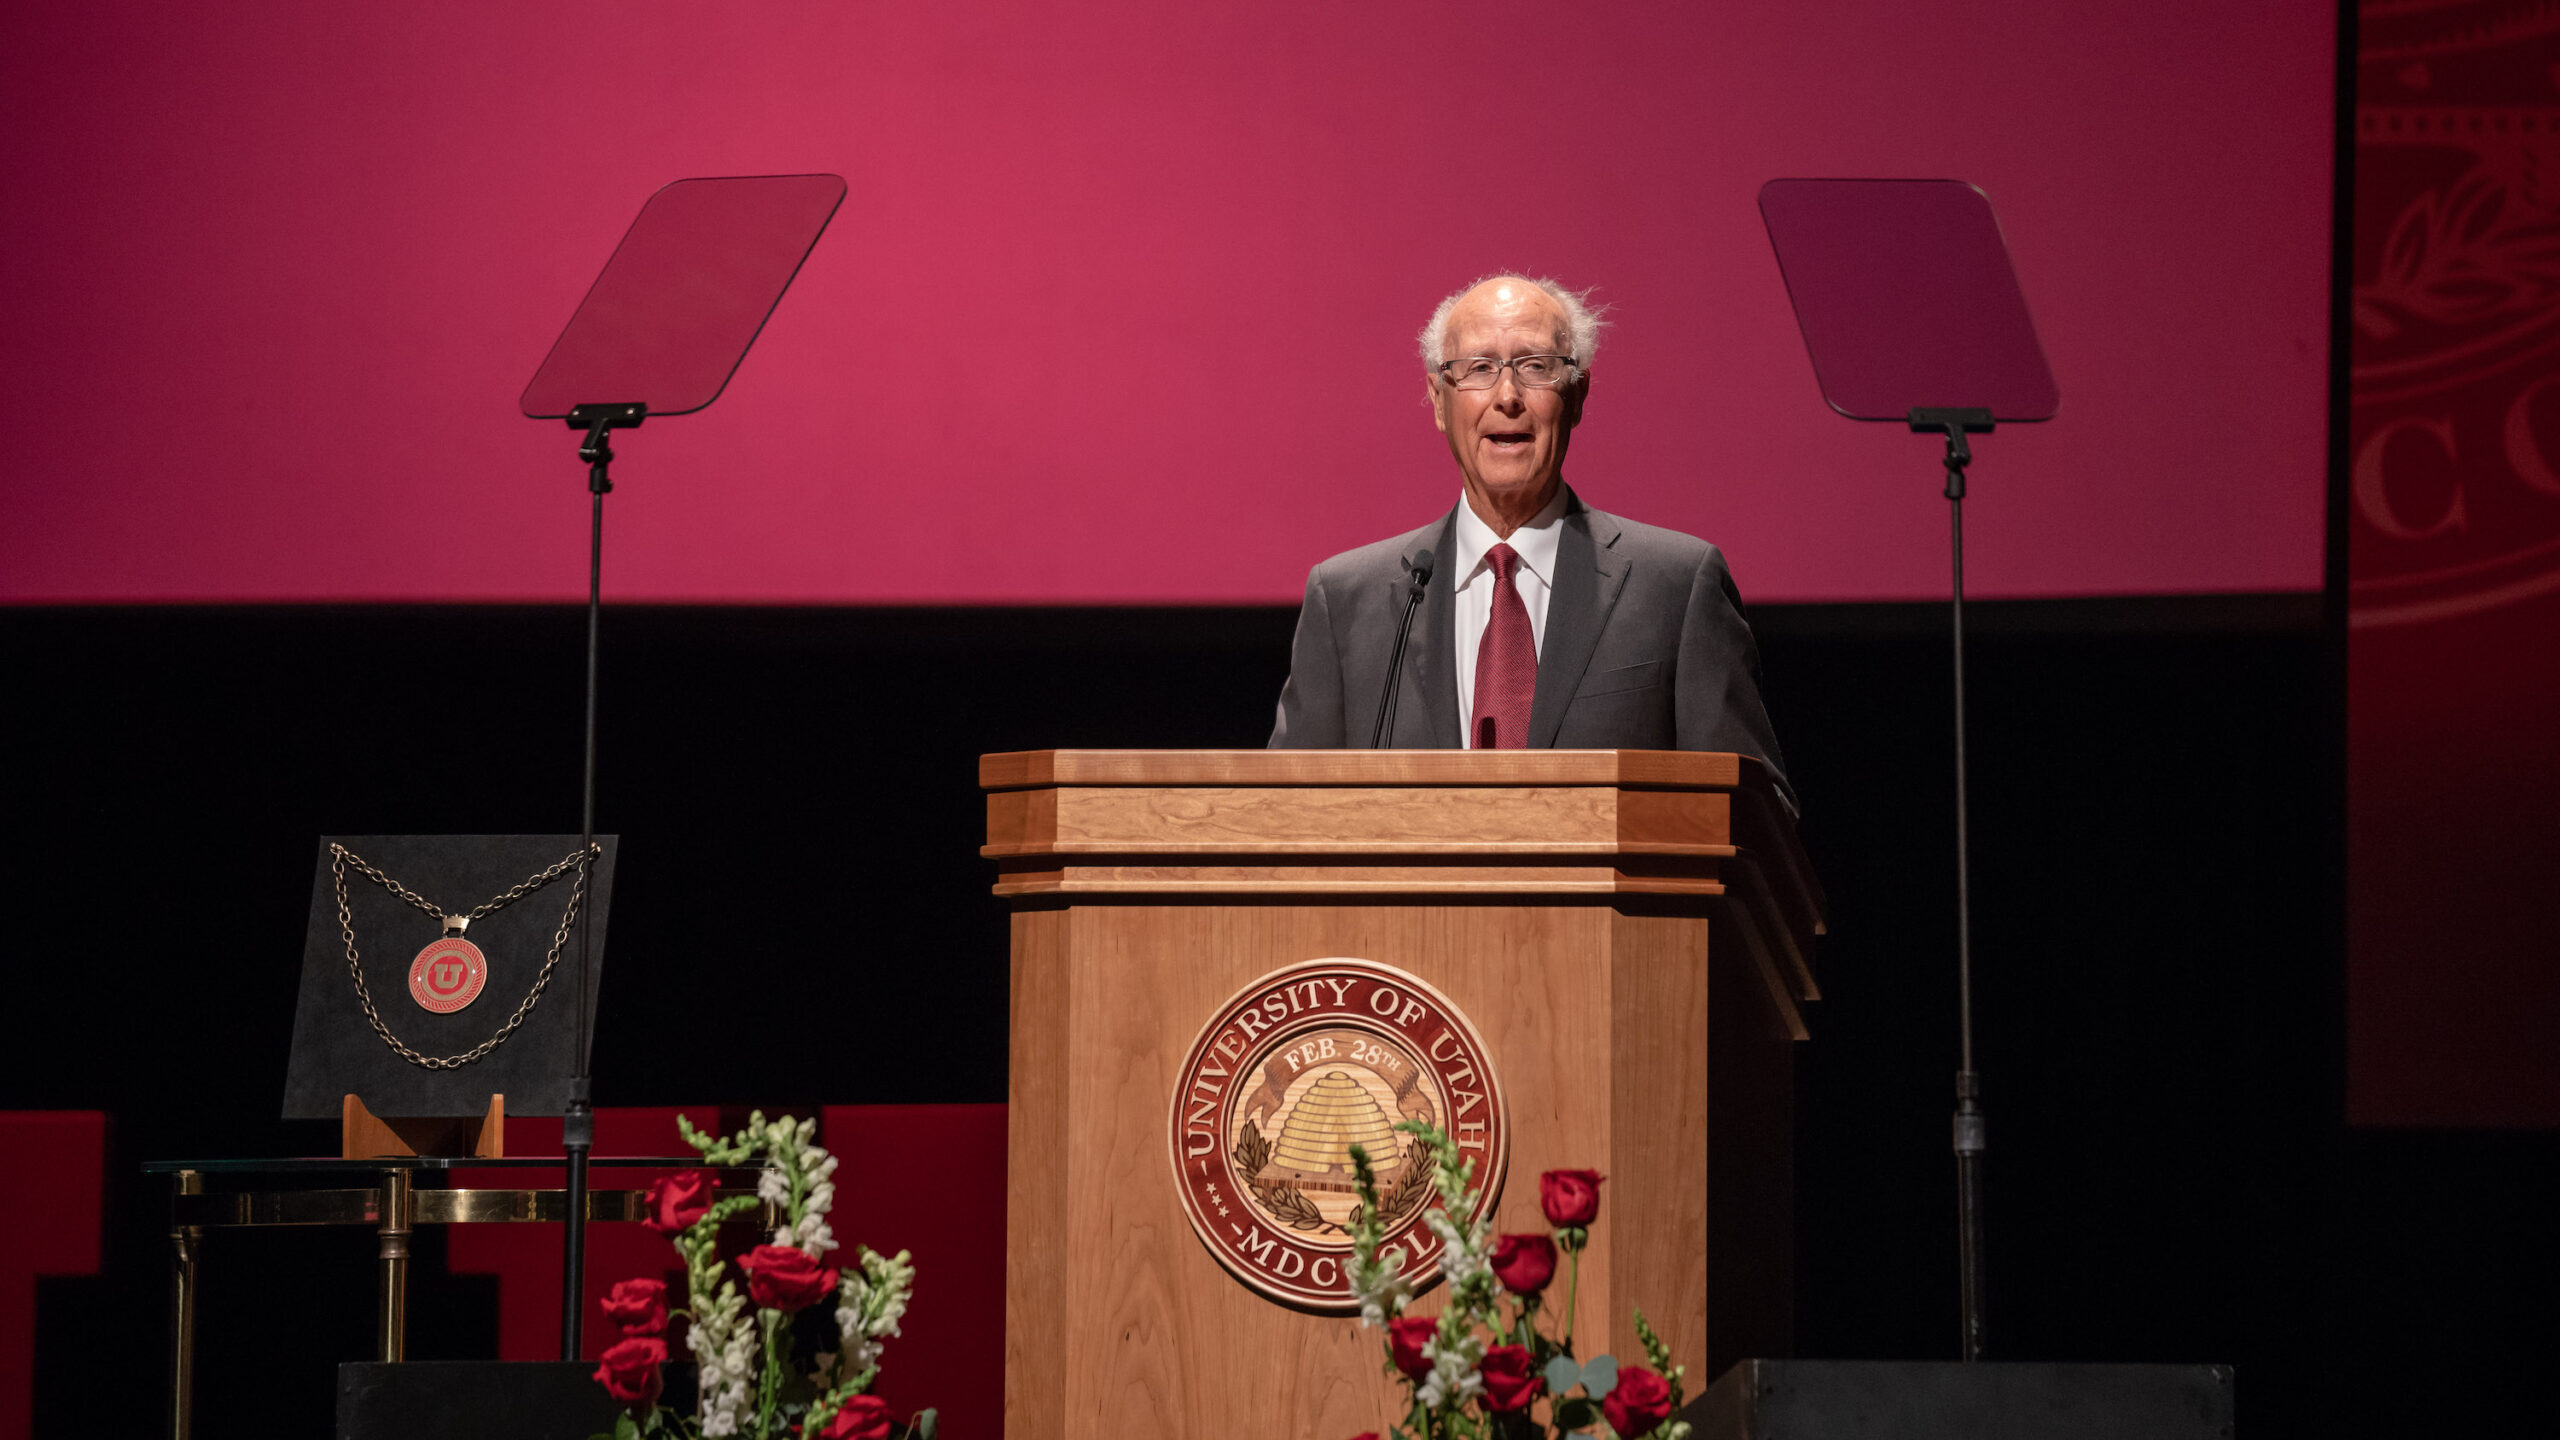 Gardner speaks at the inauguration for Ruth V. Watkins, the 16th president of the University of Uta...